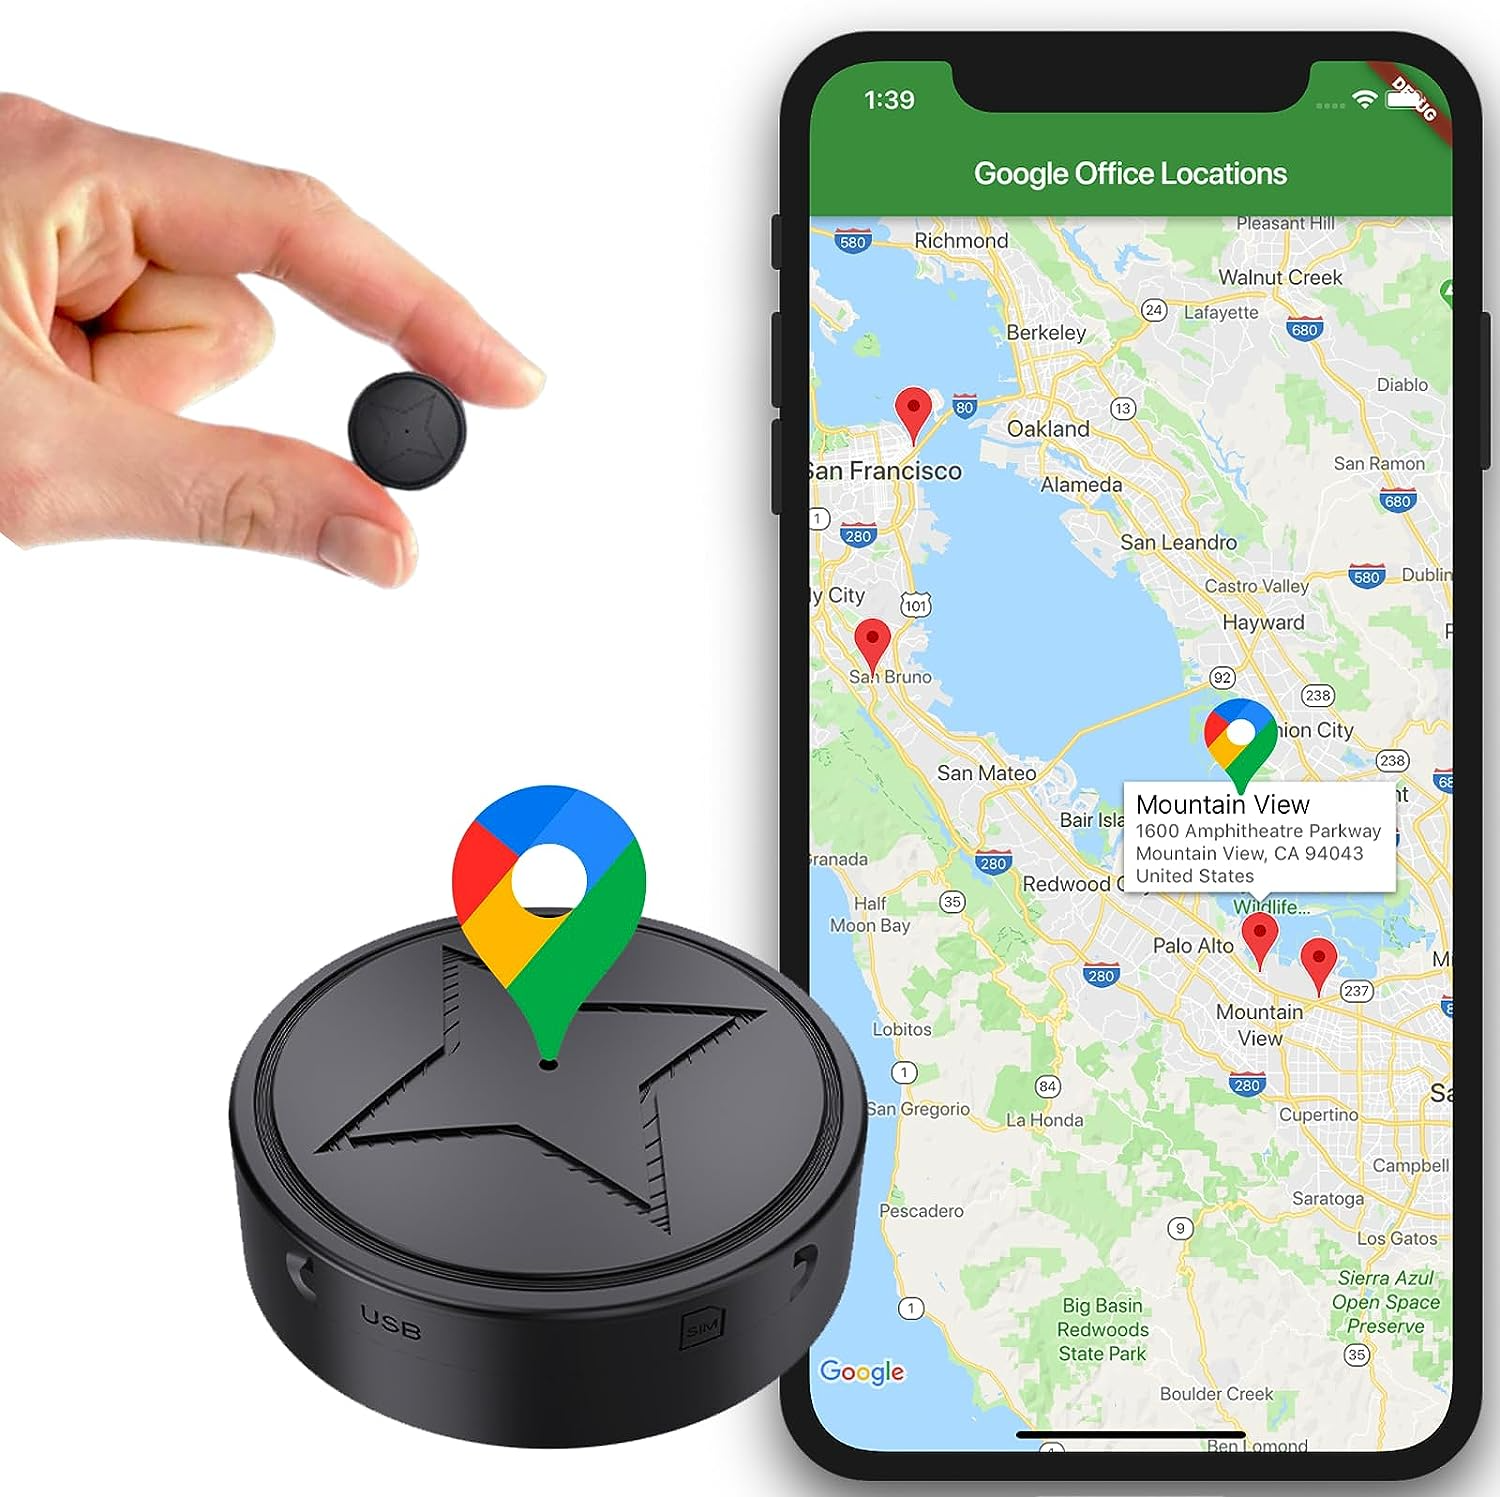 EasyTrack™ | Mini-Magnetische GPS Tracker